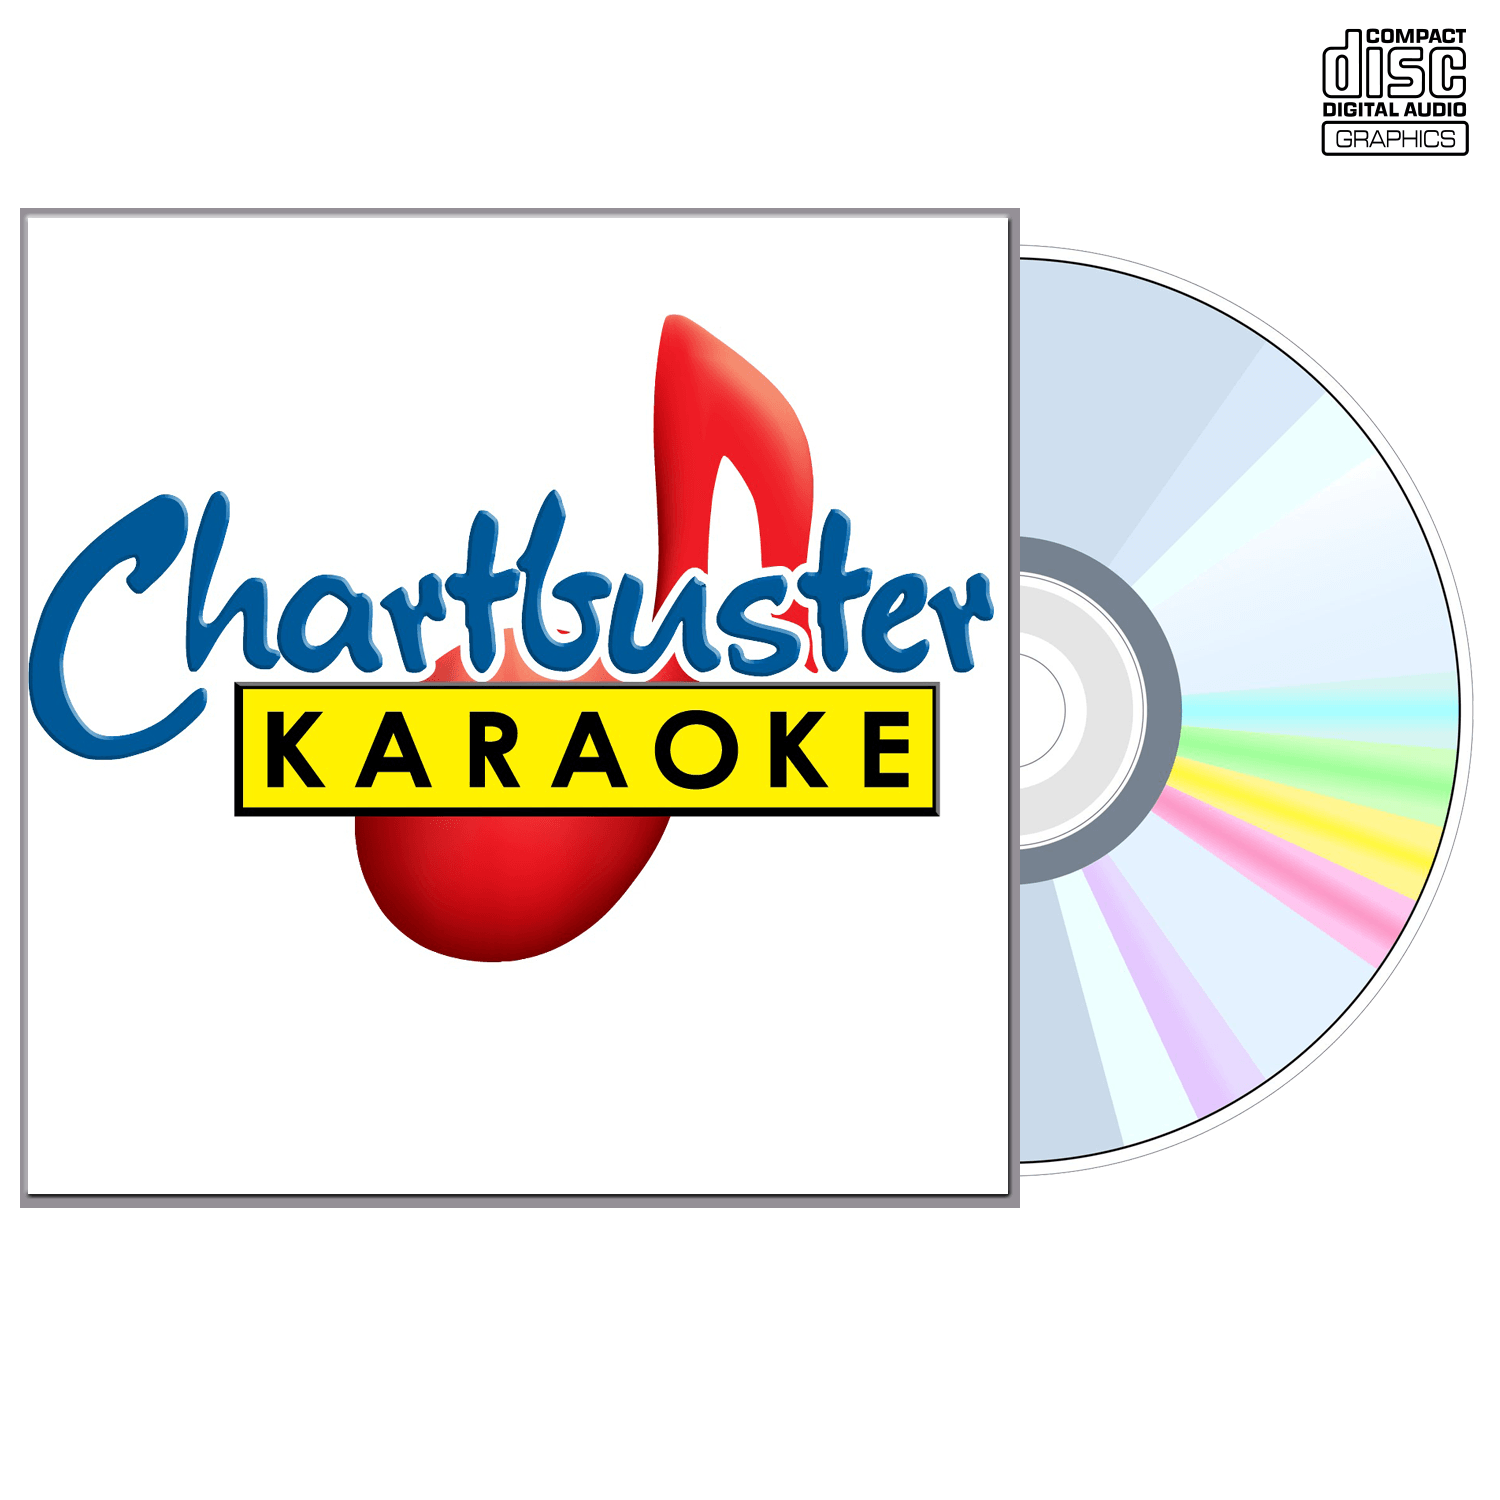 Britney Spears Vol 1 - CD+G - Chartbuster Karaoke - Karaoke Home Entertainment